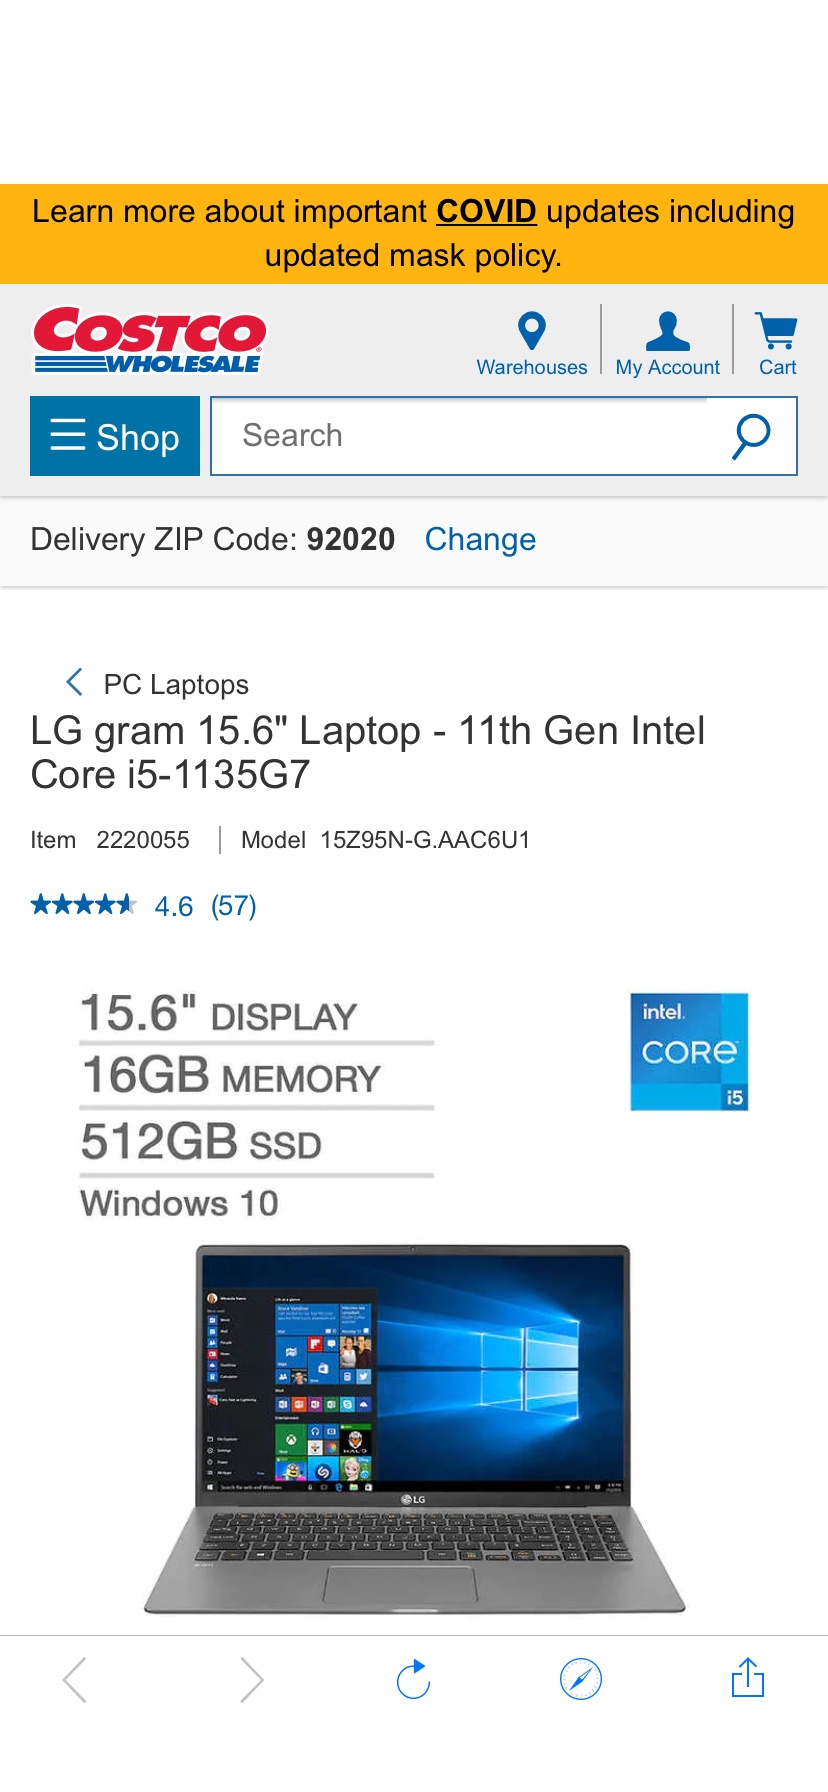 LG gram 15.6" Laptop - 11th Gen Intel Core i5-1135G7 | Costco轻薄本